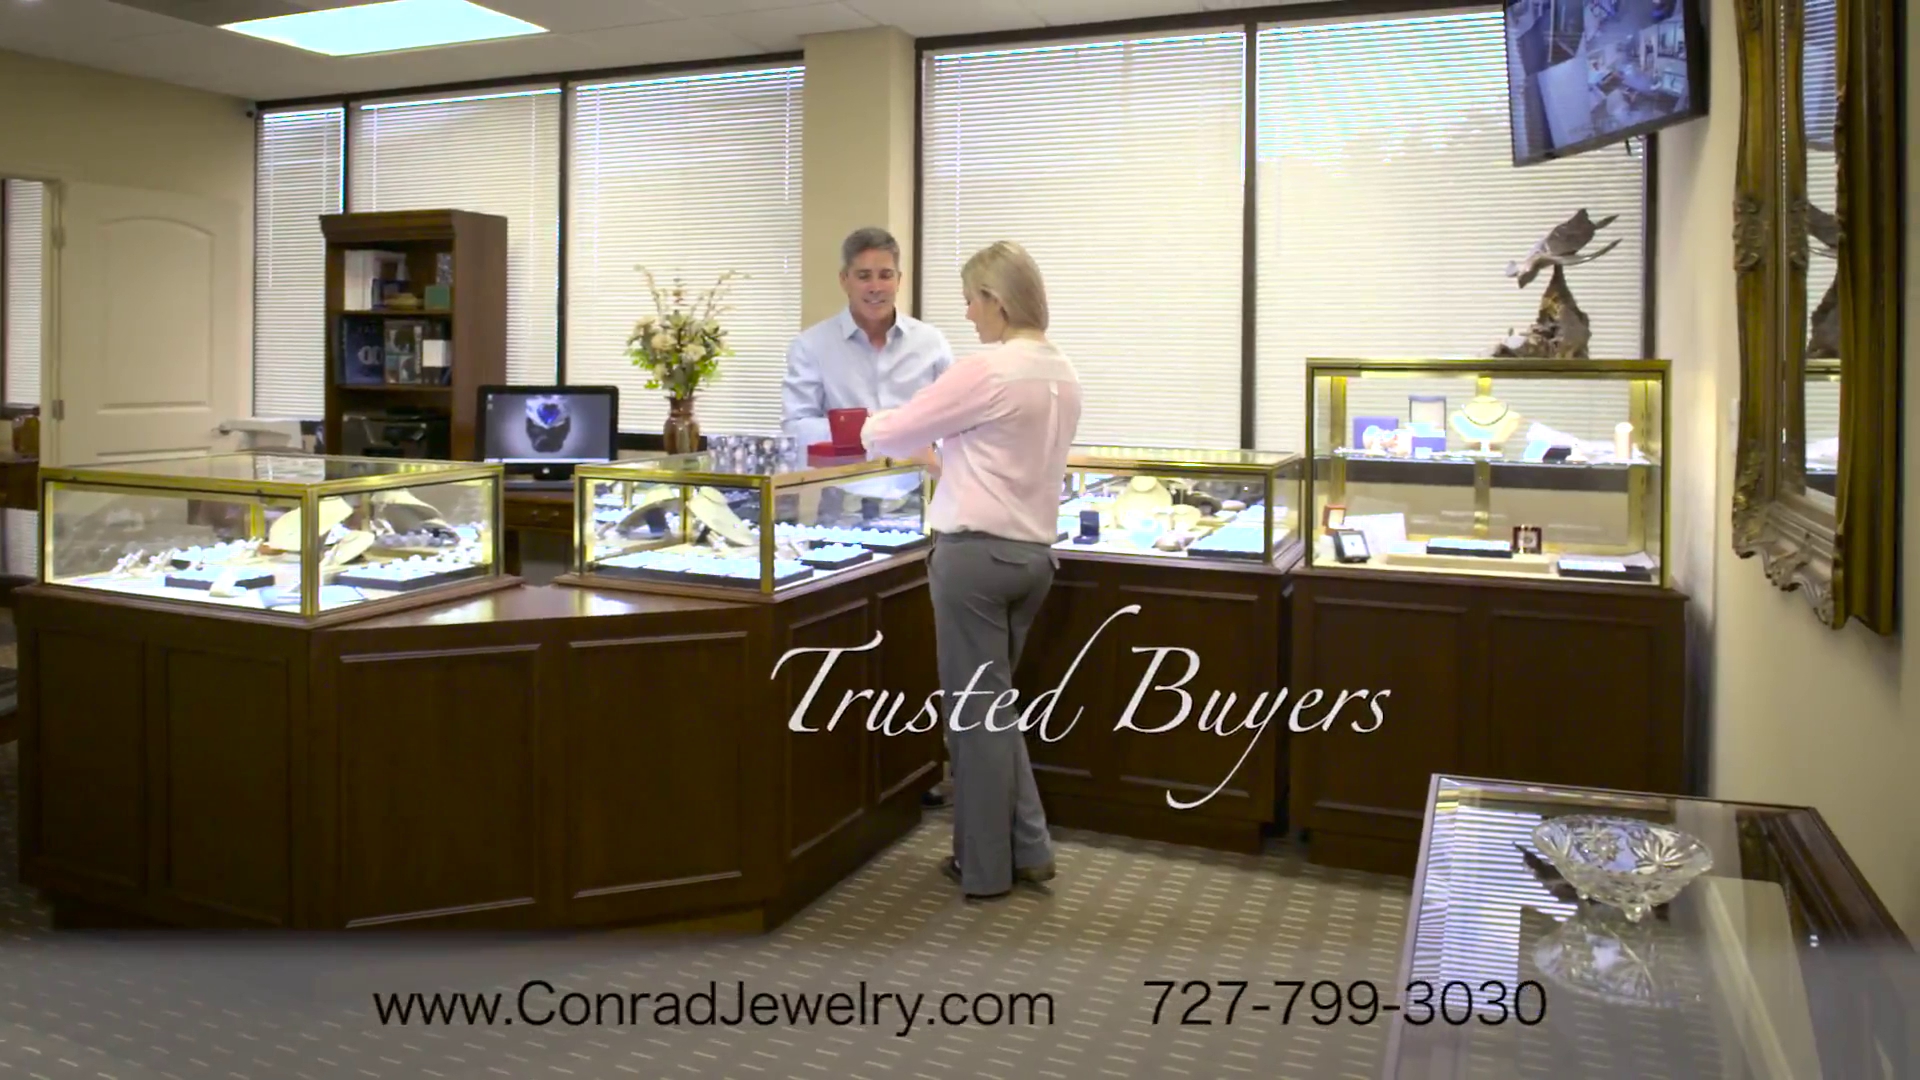 Conrad Jewelry